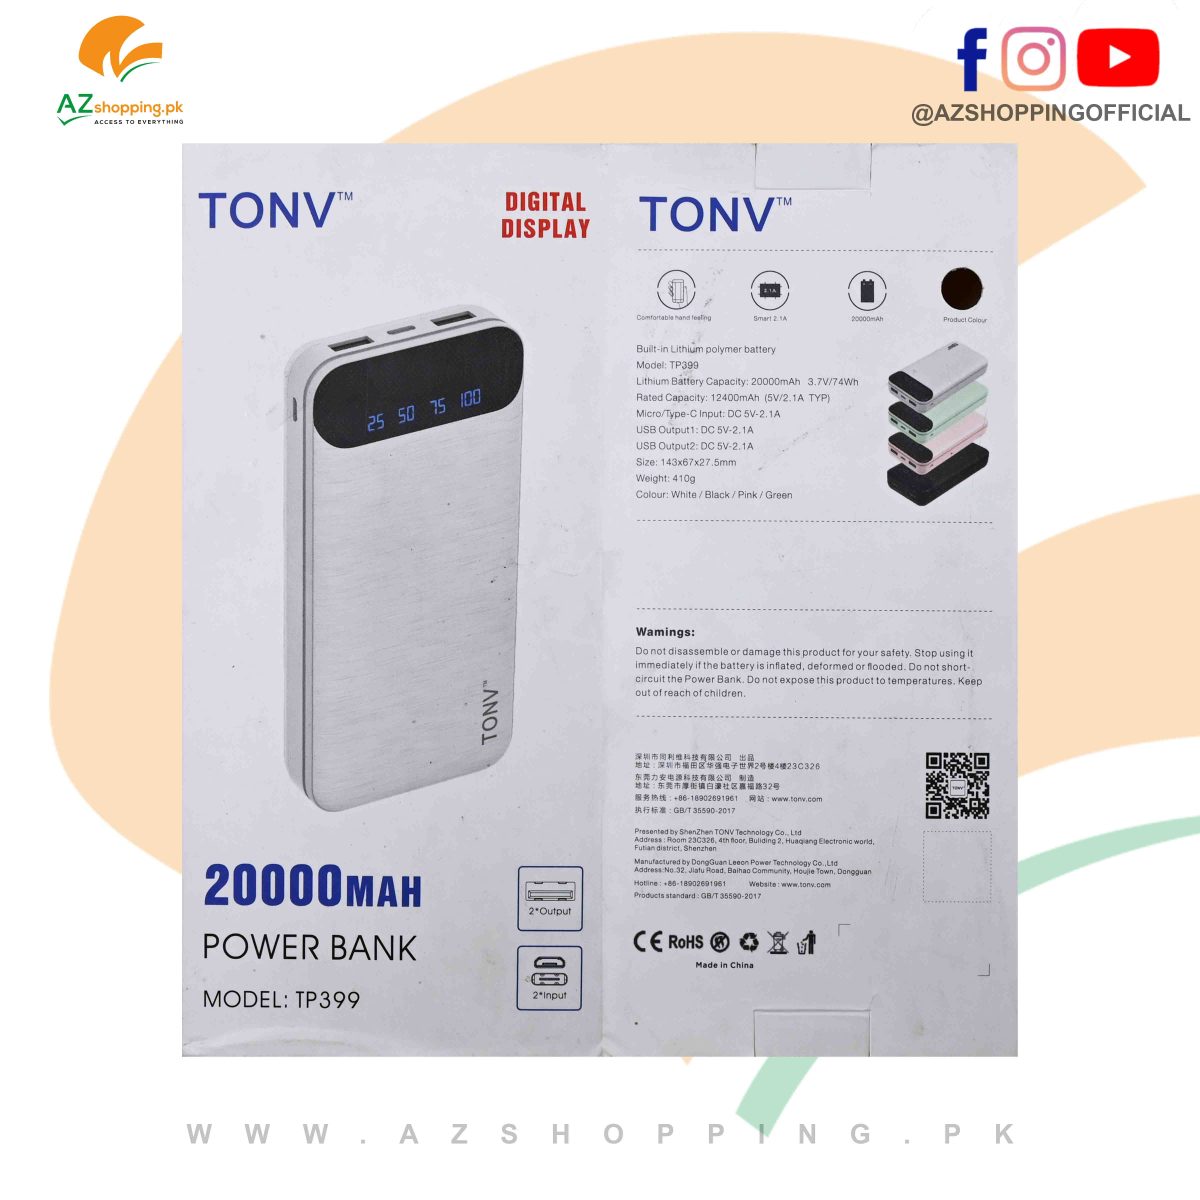 Tony – Power Bank 20,000 mAh with Digital Display – Model: TP399